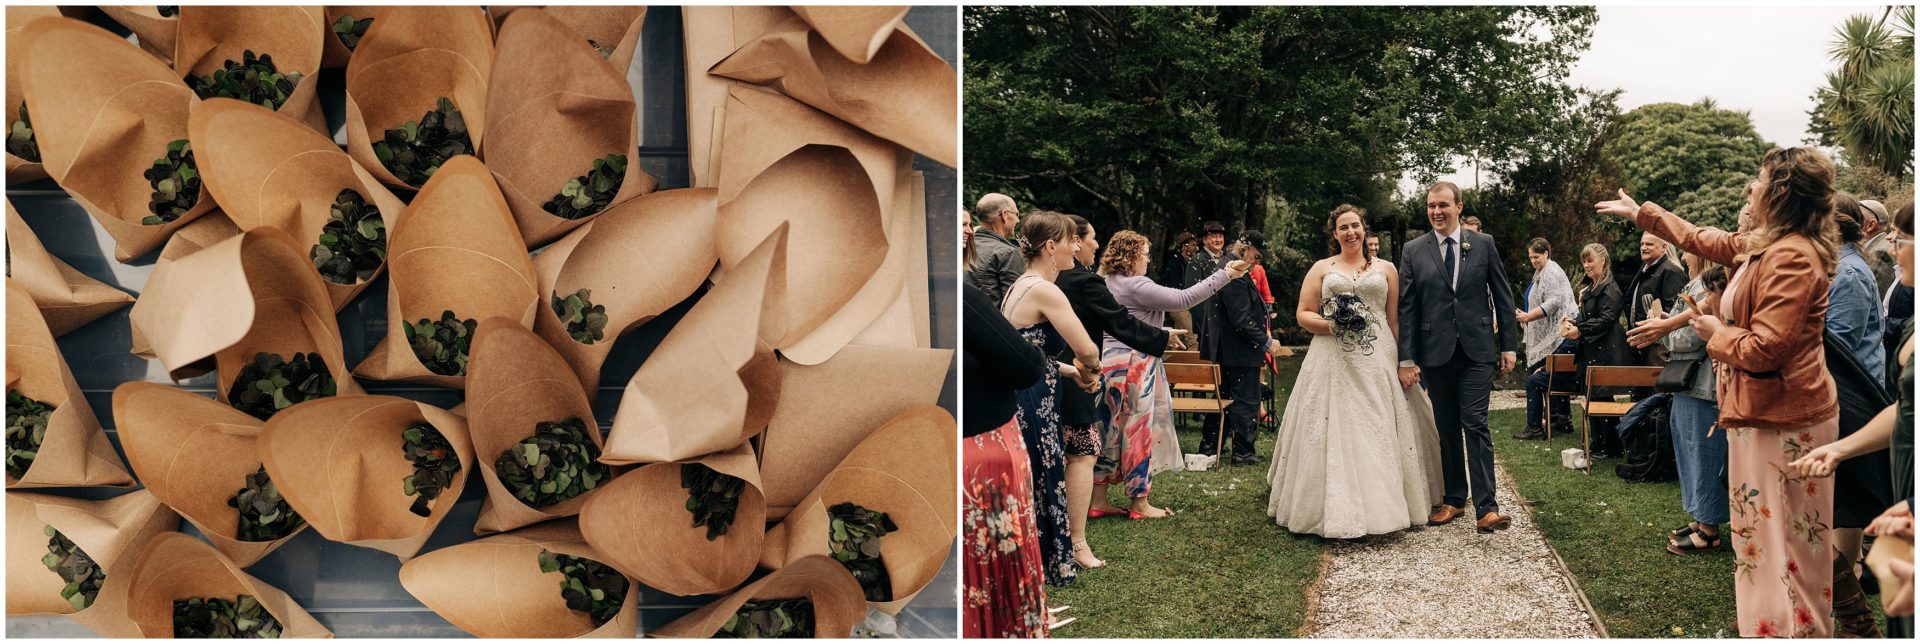 stewart-island-wedding-moturau-gardens-ceremony